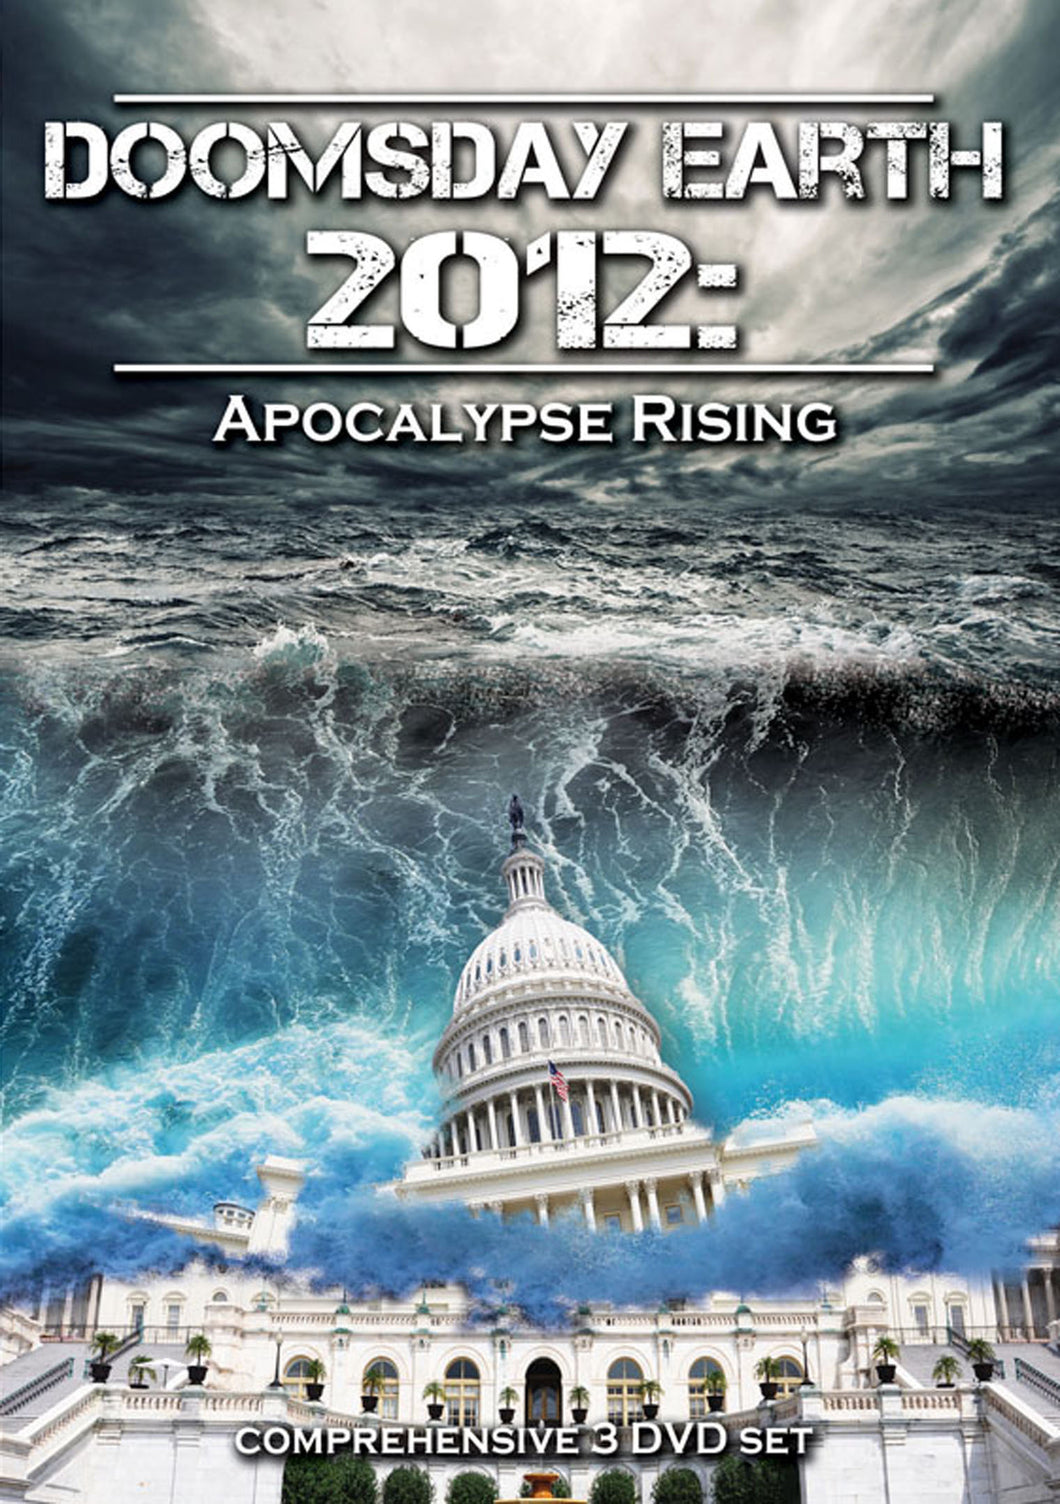 Doomsday Earth 2012: Apocalypse Rising (DVD)